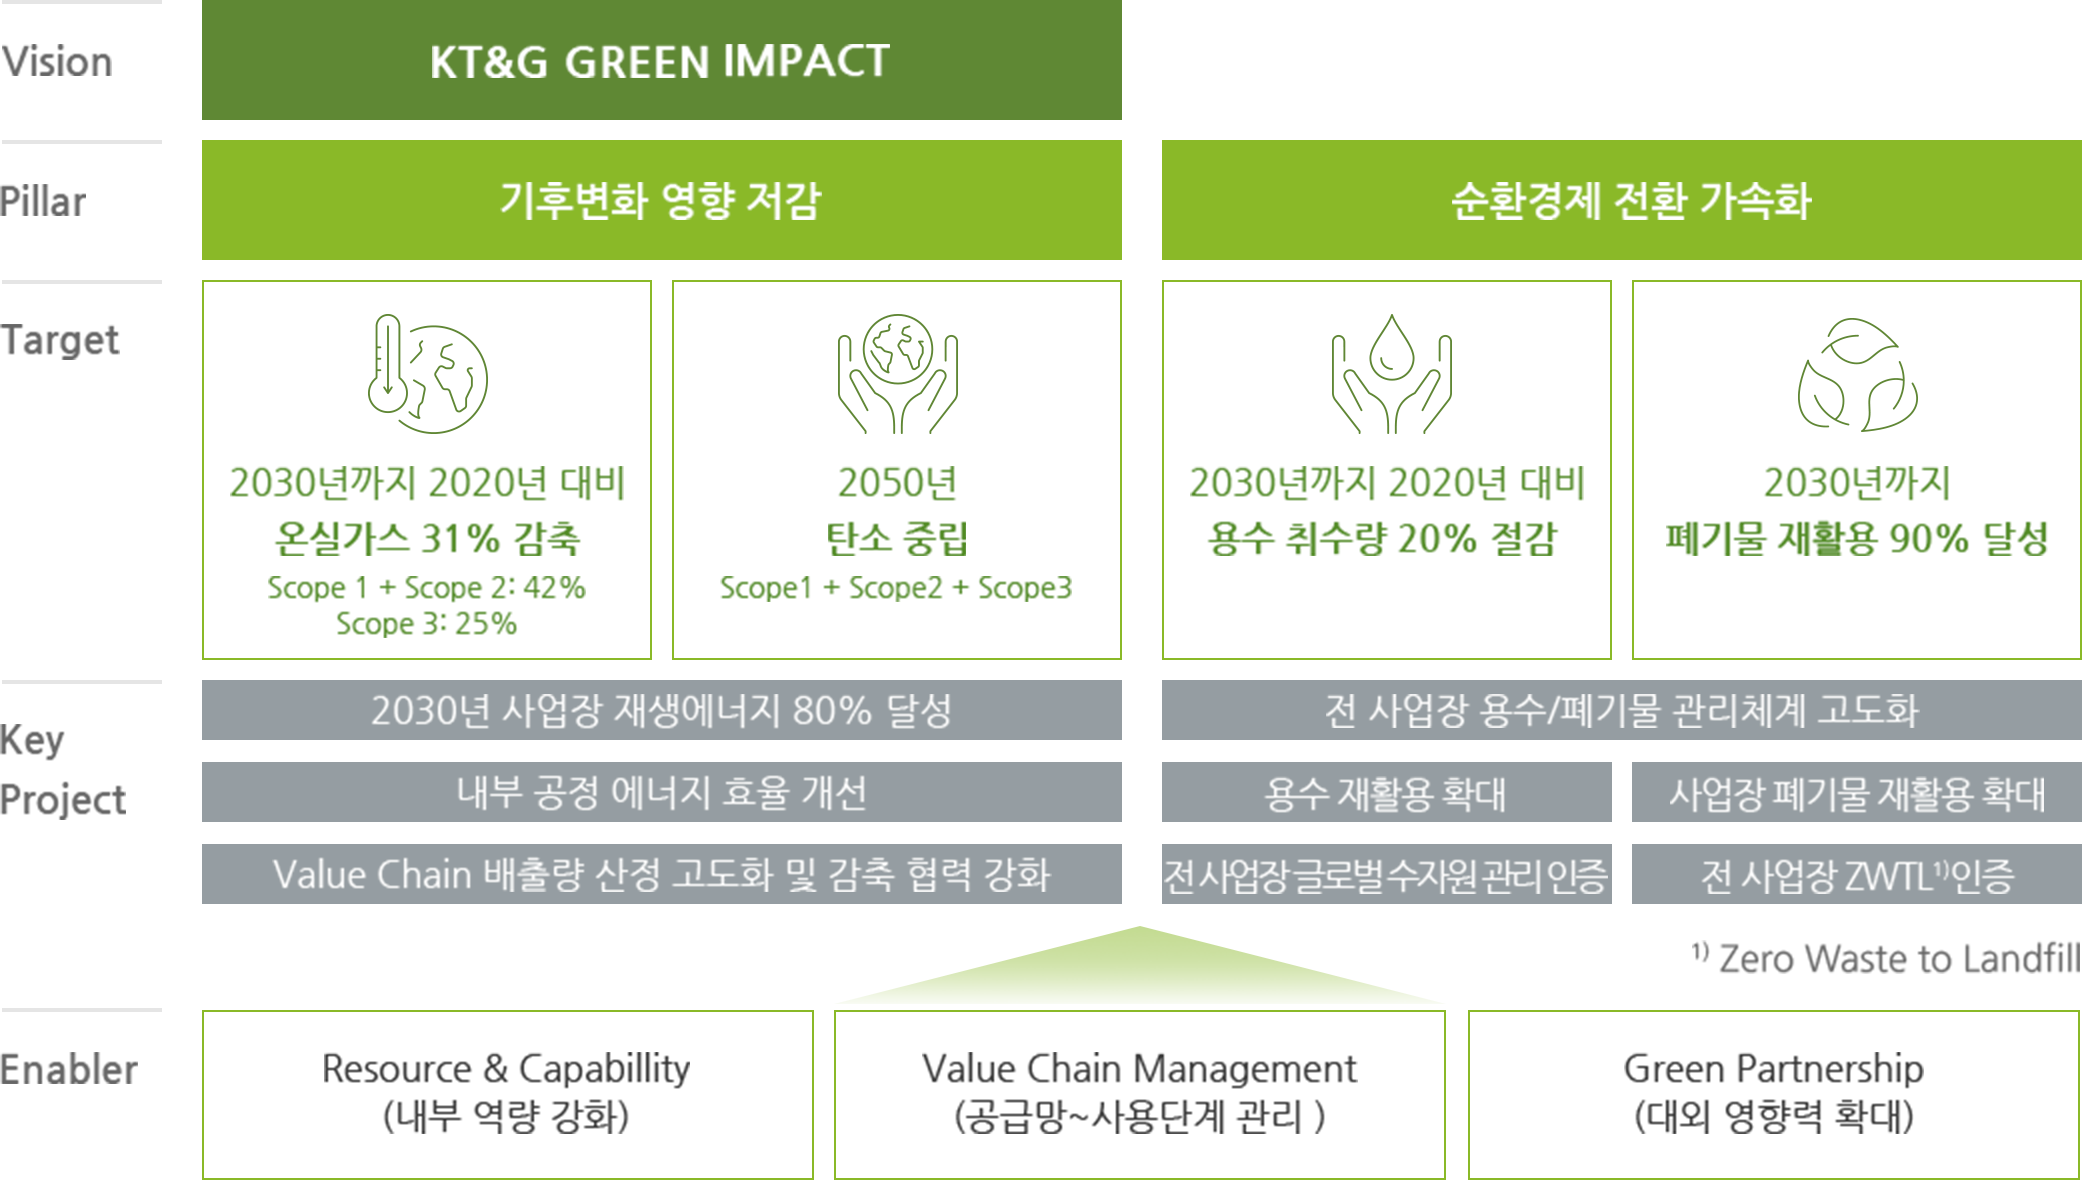 Vision : KT&G GREEN IMPACT / 1. Pillar : 기후변화 영향 저감 / target : 2030년까지 2020년 대비 온실가스 31% 감축(- Scope 1 + Scope 2: 42%, Scope 3: 25%), 2050년 탄소 중립(- Scope1 + Scope2 + Scope3) / Key Project : 2030년 사업장 재생에너지 80% 달성, 내부 공정 에너지 효율 개선, Value Chain 배출량 산정 고도화 및 감축 협력 강화 / 2. PillAr : 순환경제 전환 가속화 / Target :2030년까지 2020년 대비 용수 사용량 20% 절감, 2030년까지 폐기물 재활용 90% 달성.  Key Project : 전 사업장 용수/폐기물 관리체계 고도화, 용수 재활용 확대, 전 사업장 글로벌 수자원 관리 인증, 사업장 폐기물 재활용 확대,전 사업장 ZWTL¹⁾ 인증, ¹⁾Zero Waste to Landfill / Enabler : Resource & Capabillity(내부 역량 강화), Value Chain Management(공급망~사용단계 관리), Green Partnership(대외 영향력 확대)